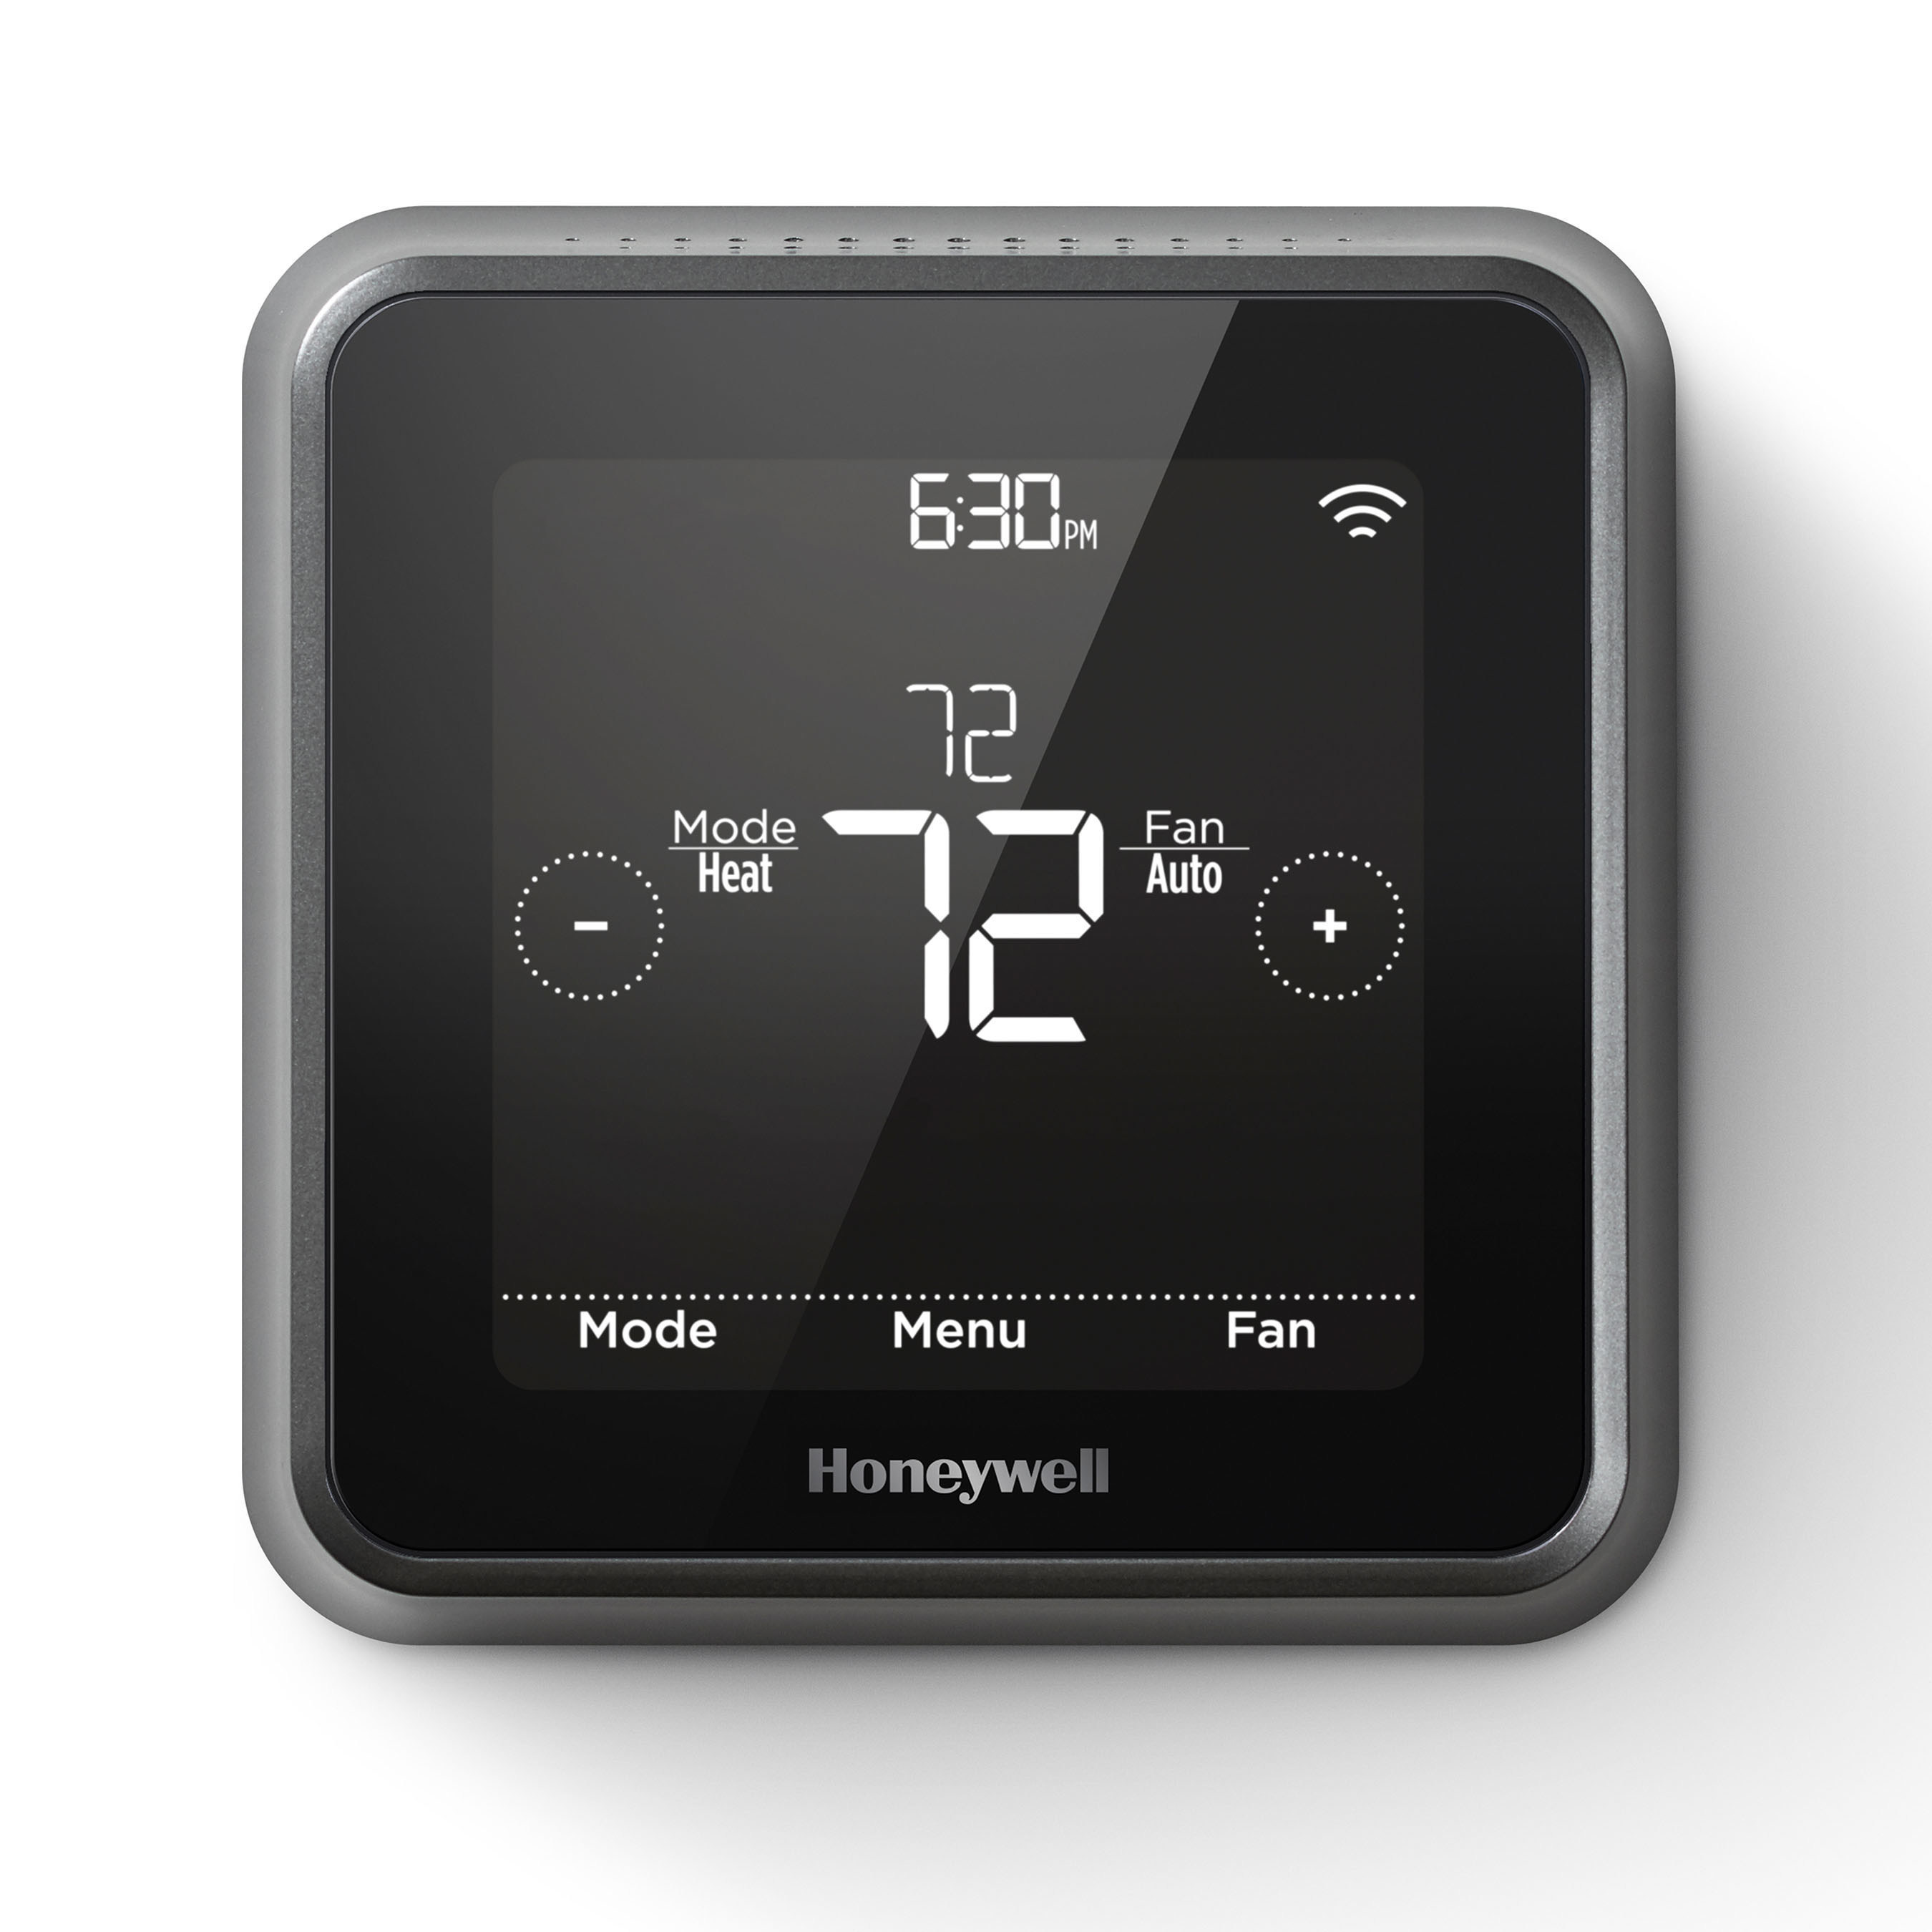 The Honeywell Lyric T5 Wi-Fi Thermostat